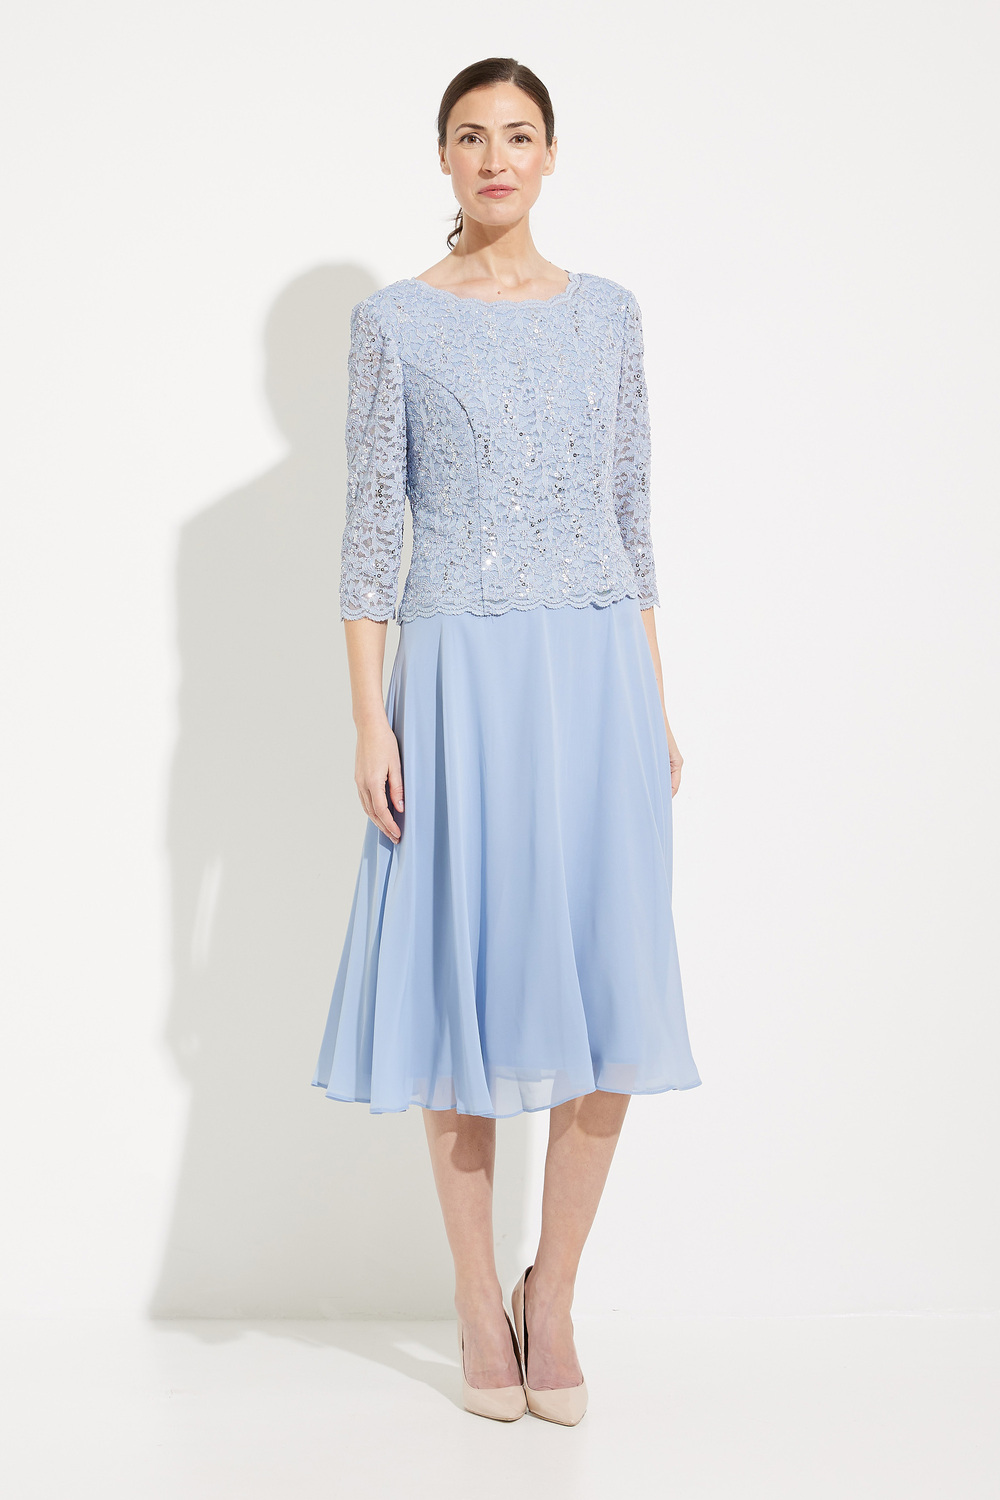 Sequin Lace & Chiffon Dress Style 1121796. Sky Blue